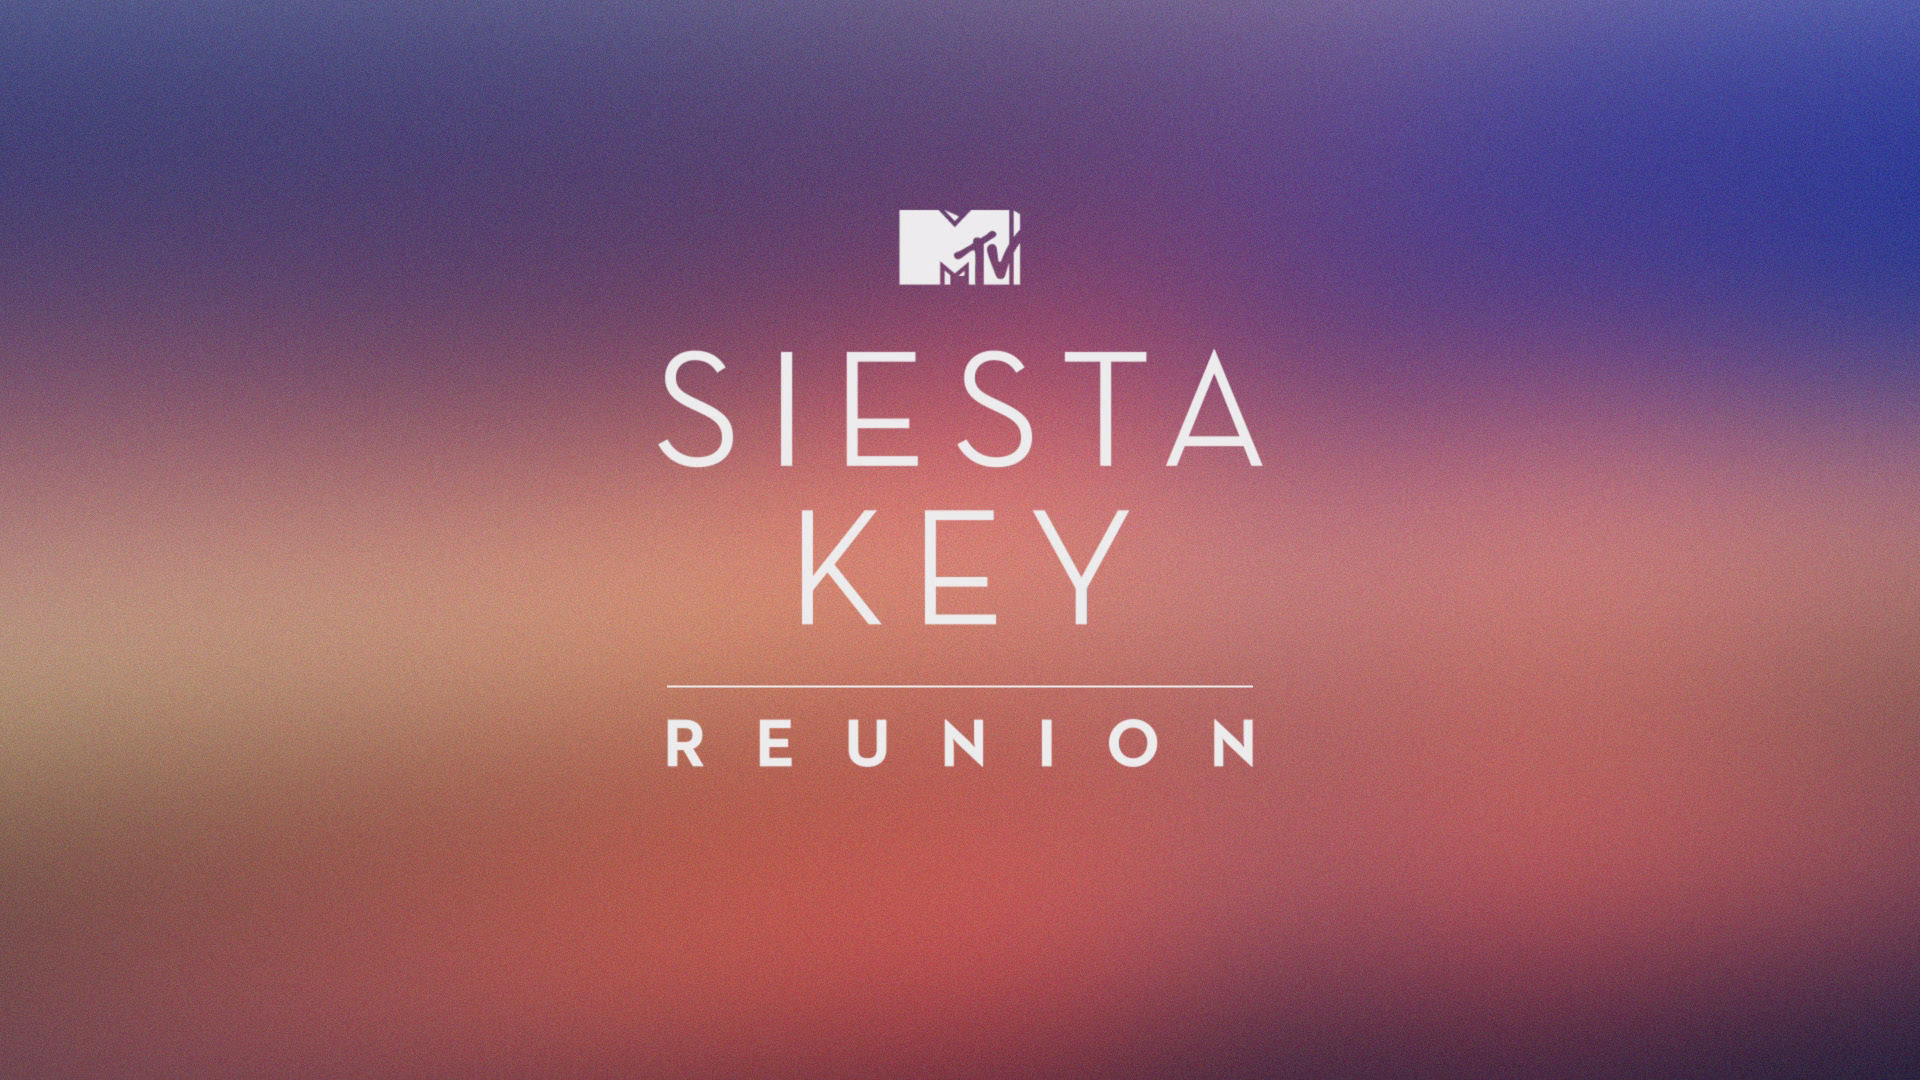 Watch Siesta Key Season 3 Episode 24 Reunion Full show on Paramount Plus